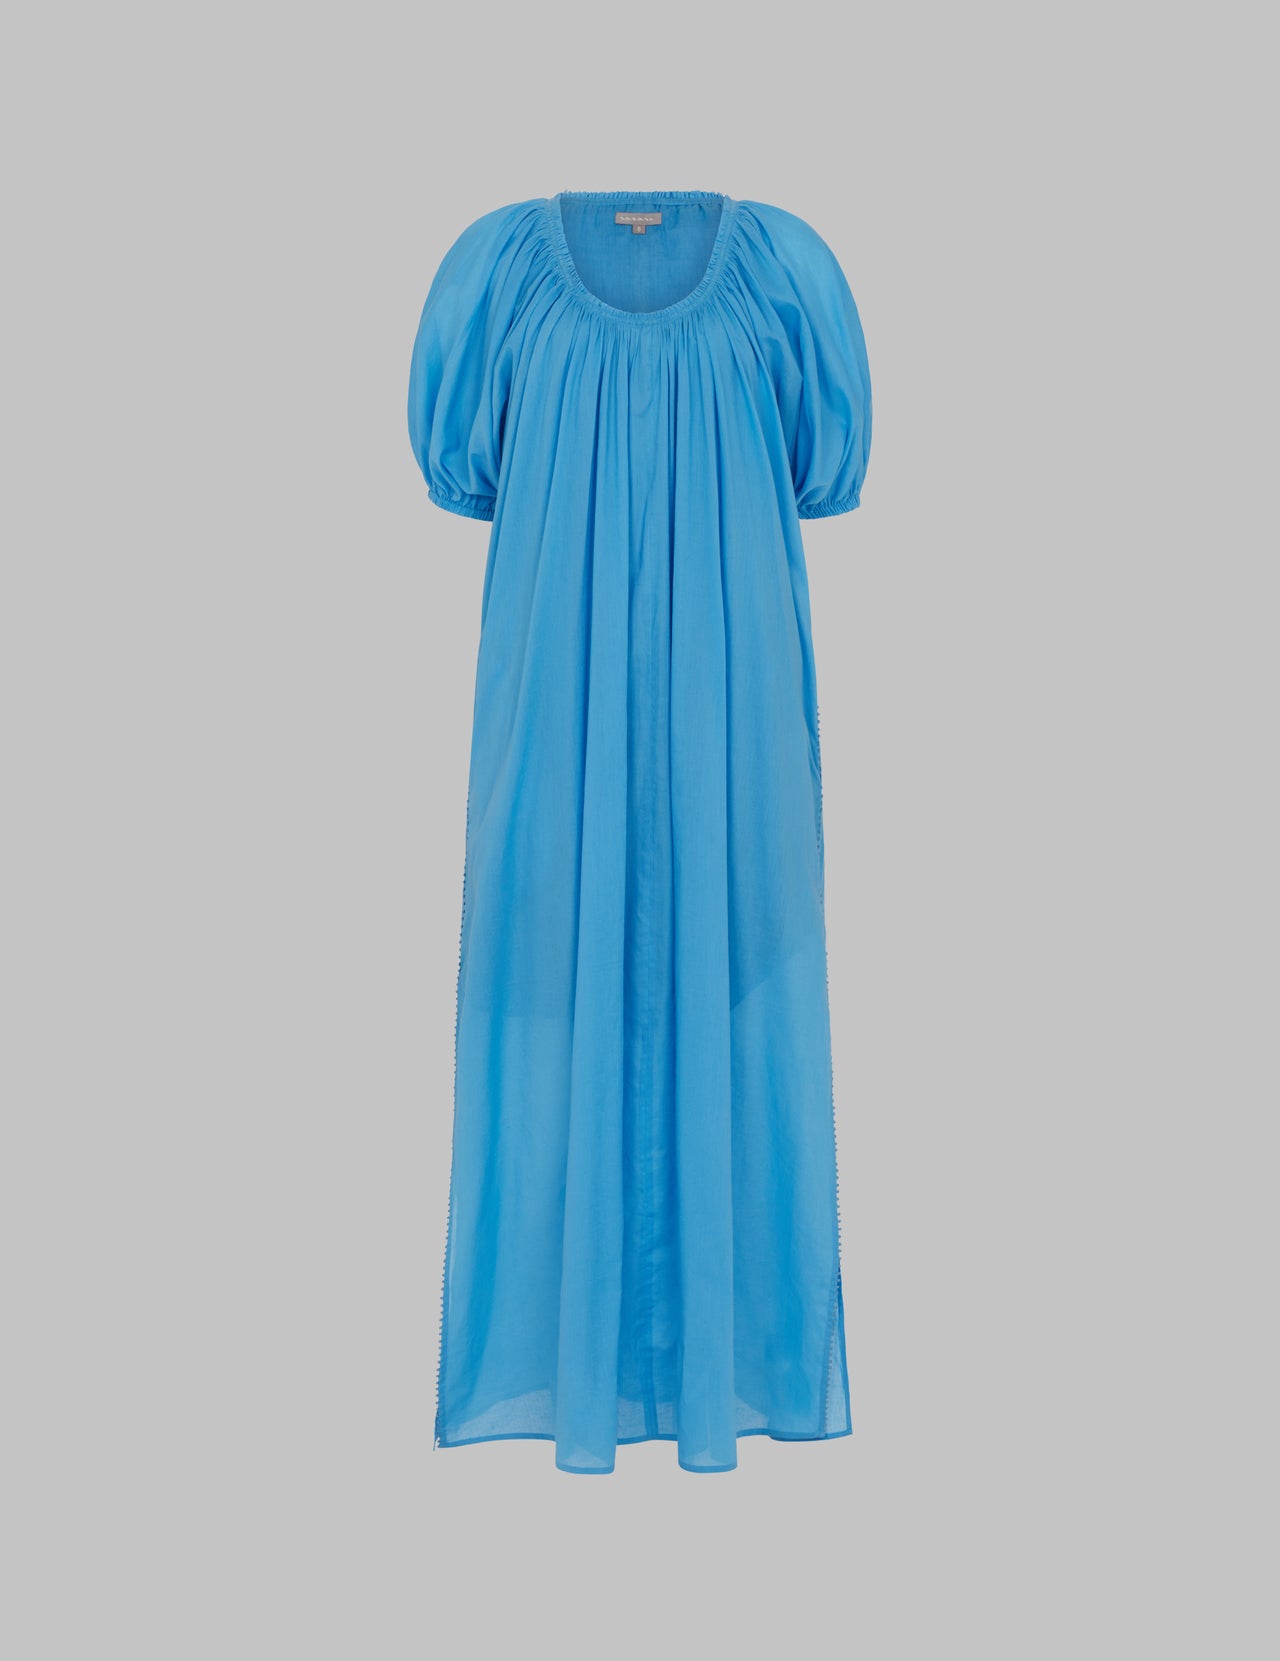  Sky Blue Cotton Voile Gathered Neckline Maxi Dress 